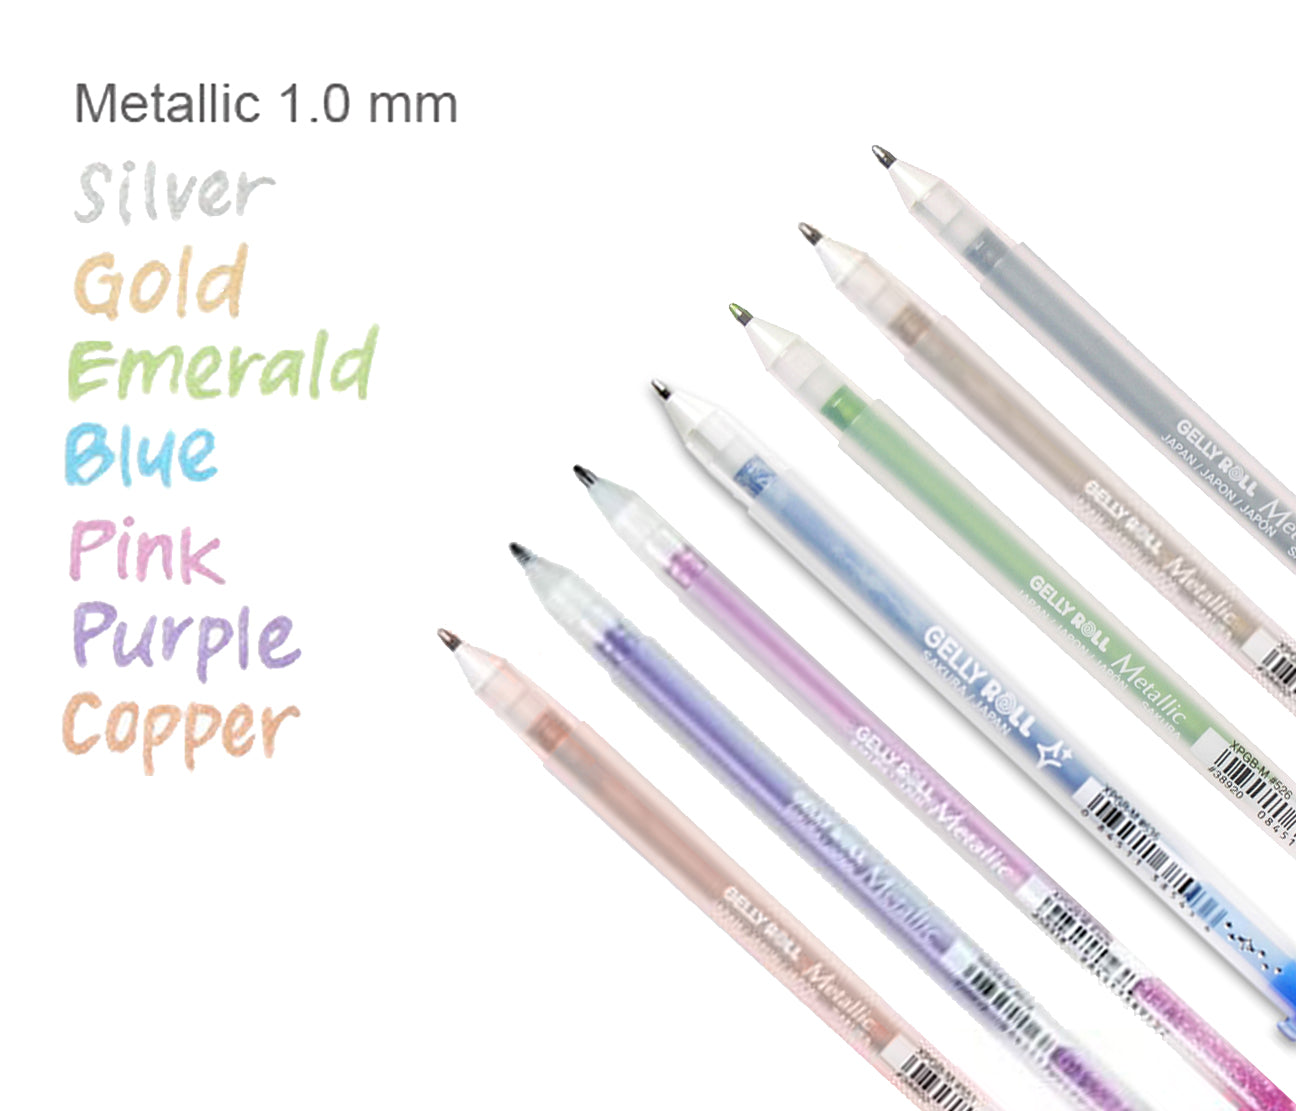 Gelly Roll Metallic Pens – EverythingArt